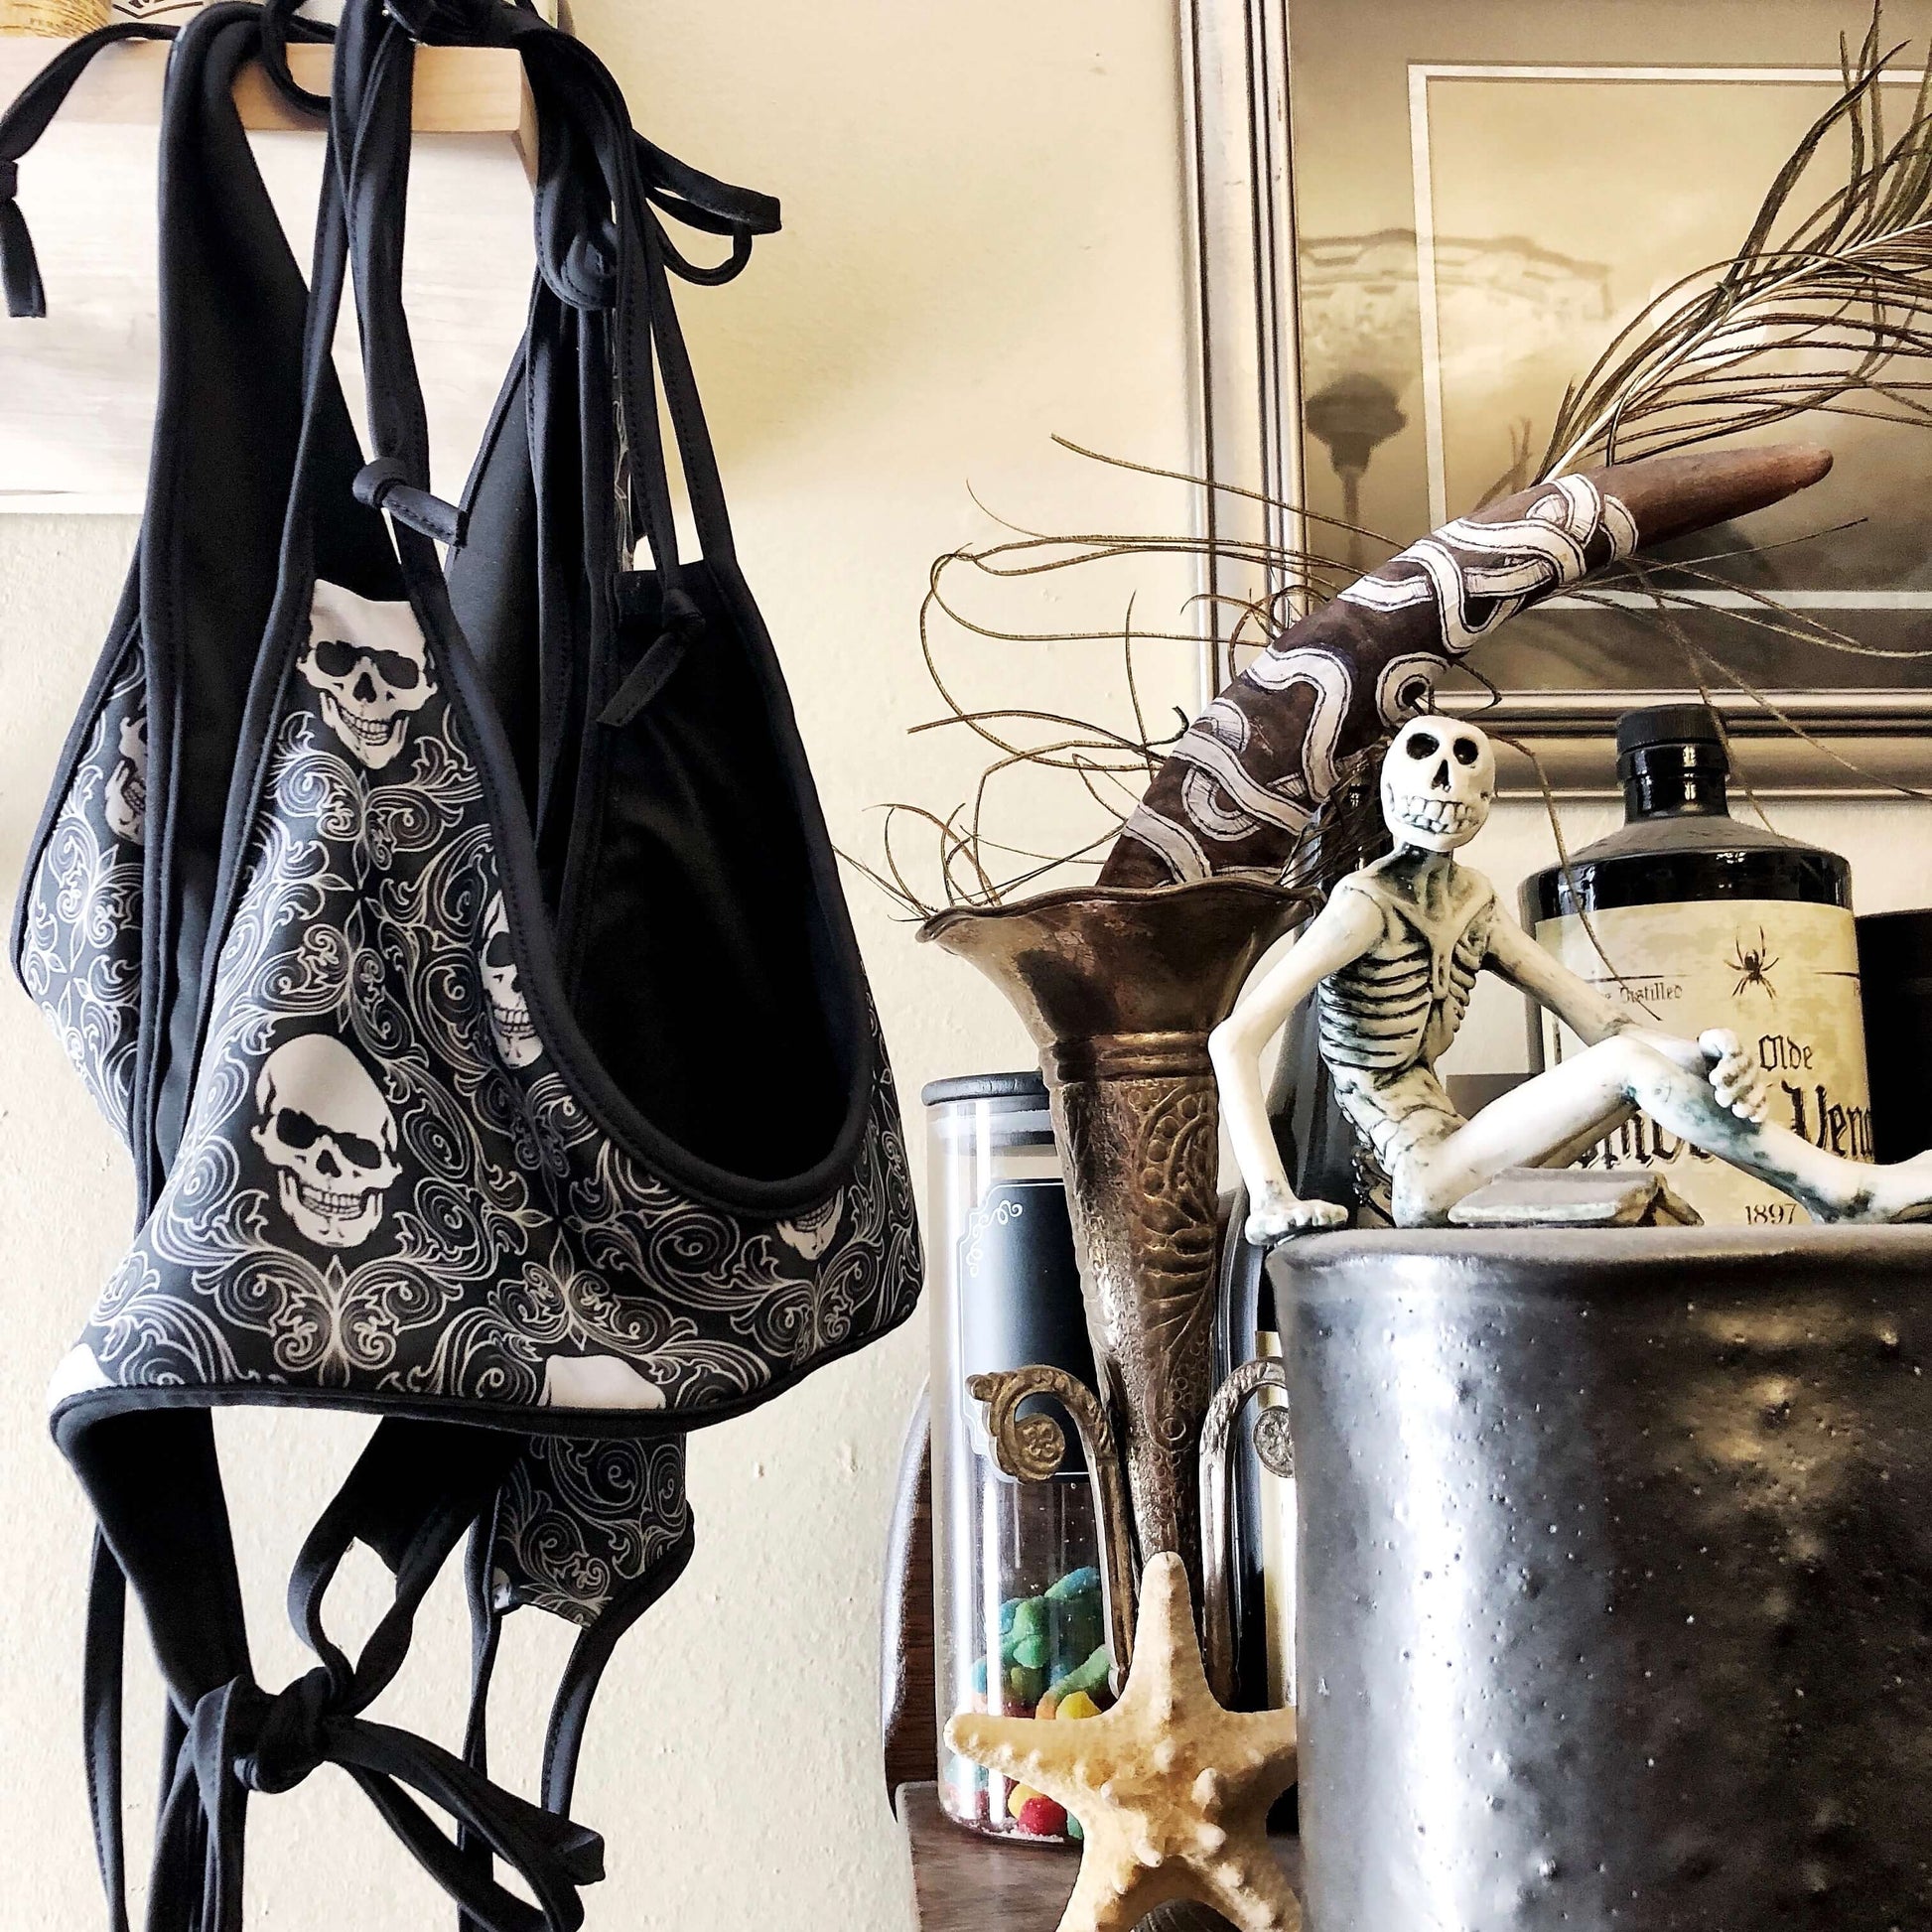 Reversible black and skull print bikini hanging next to skull and skeleton artwork